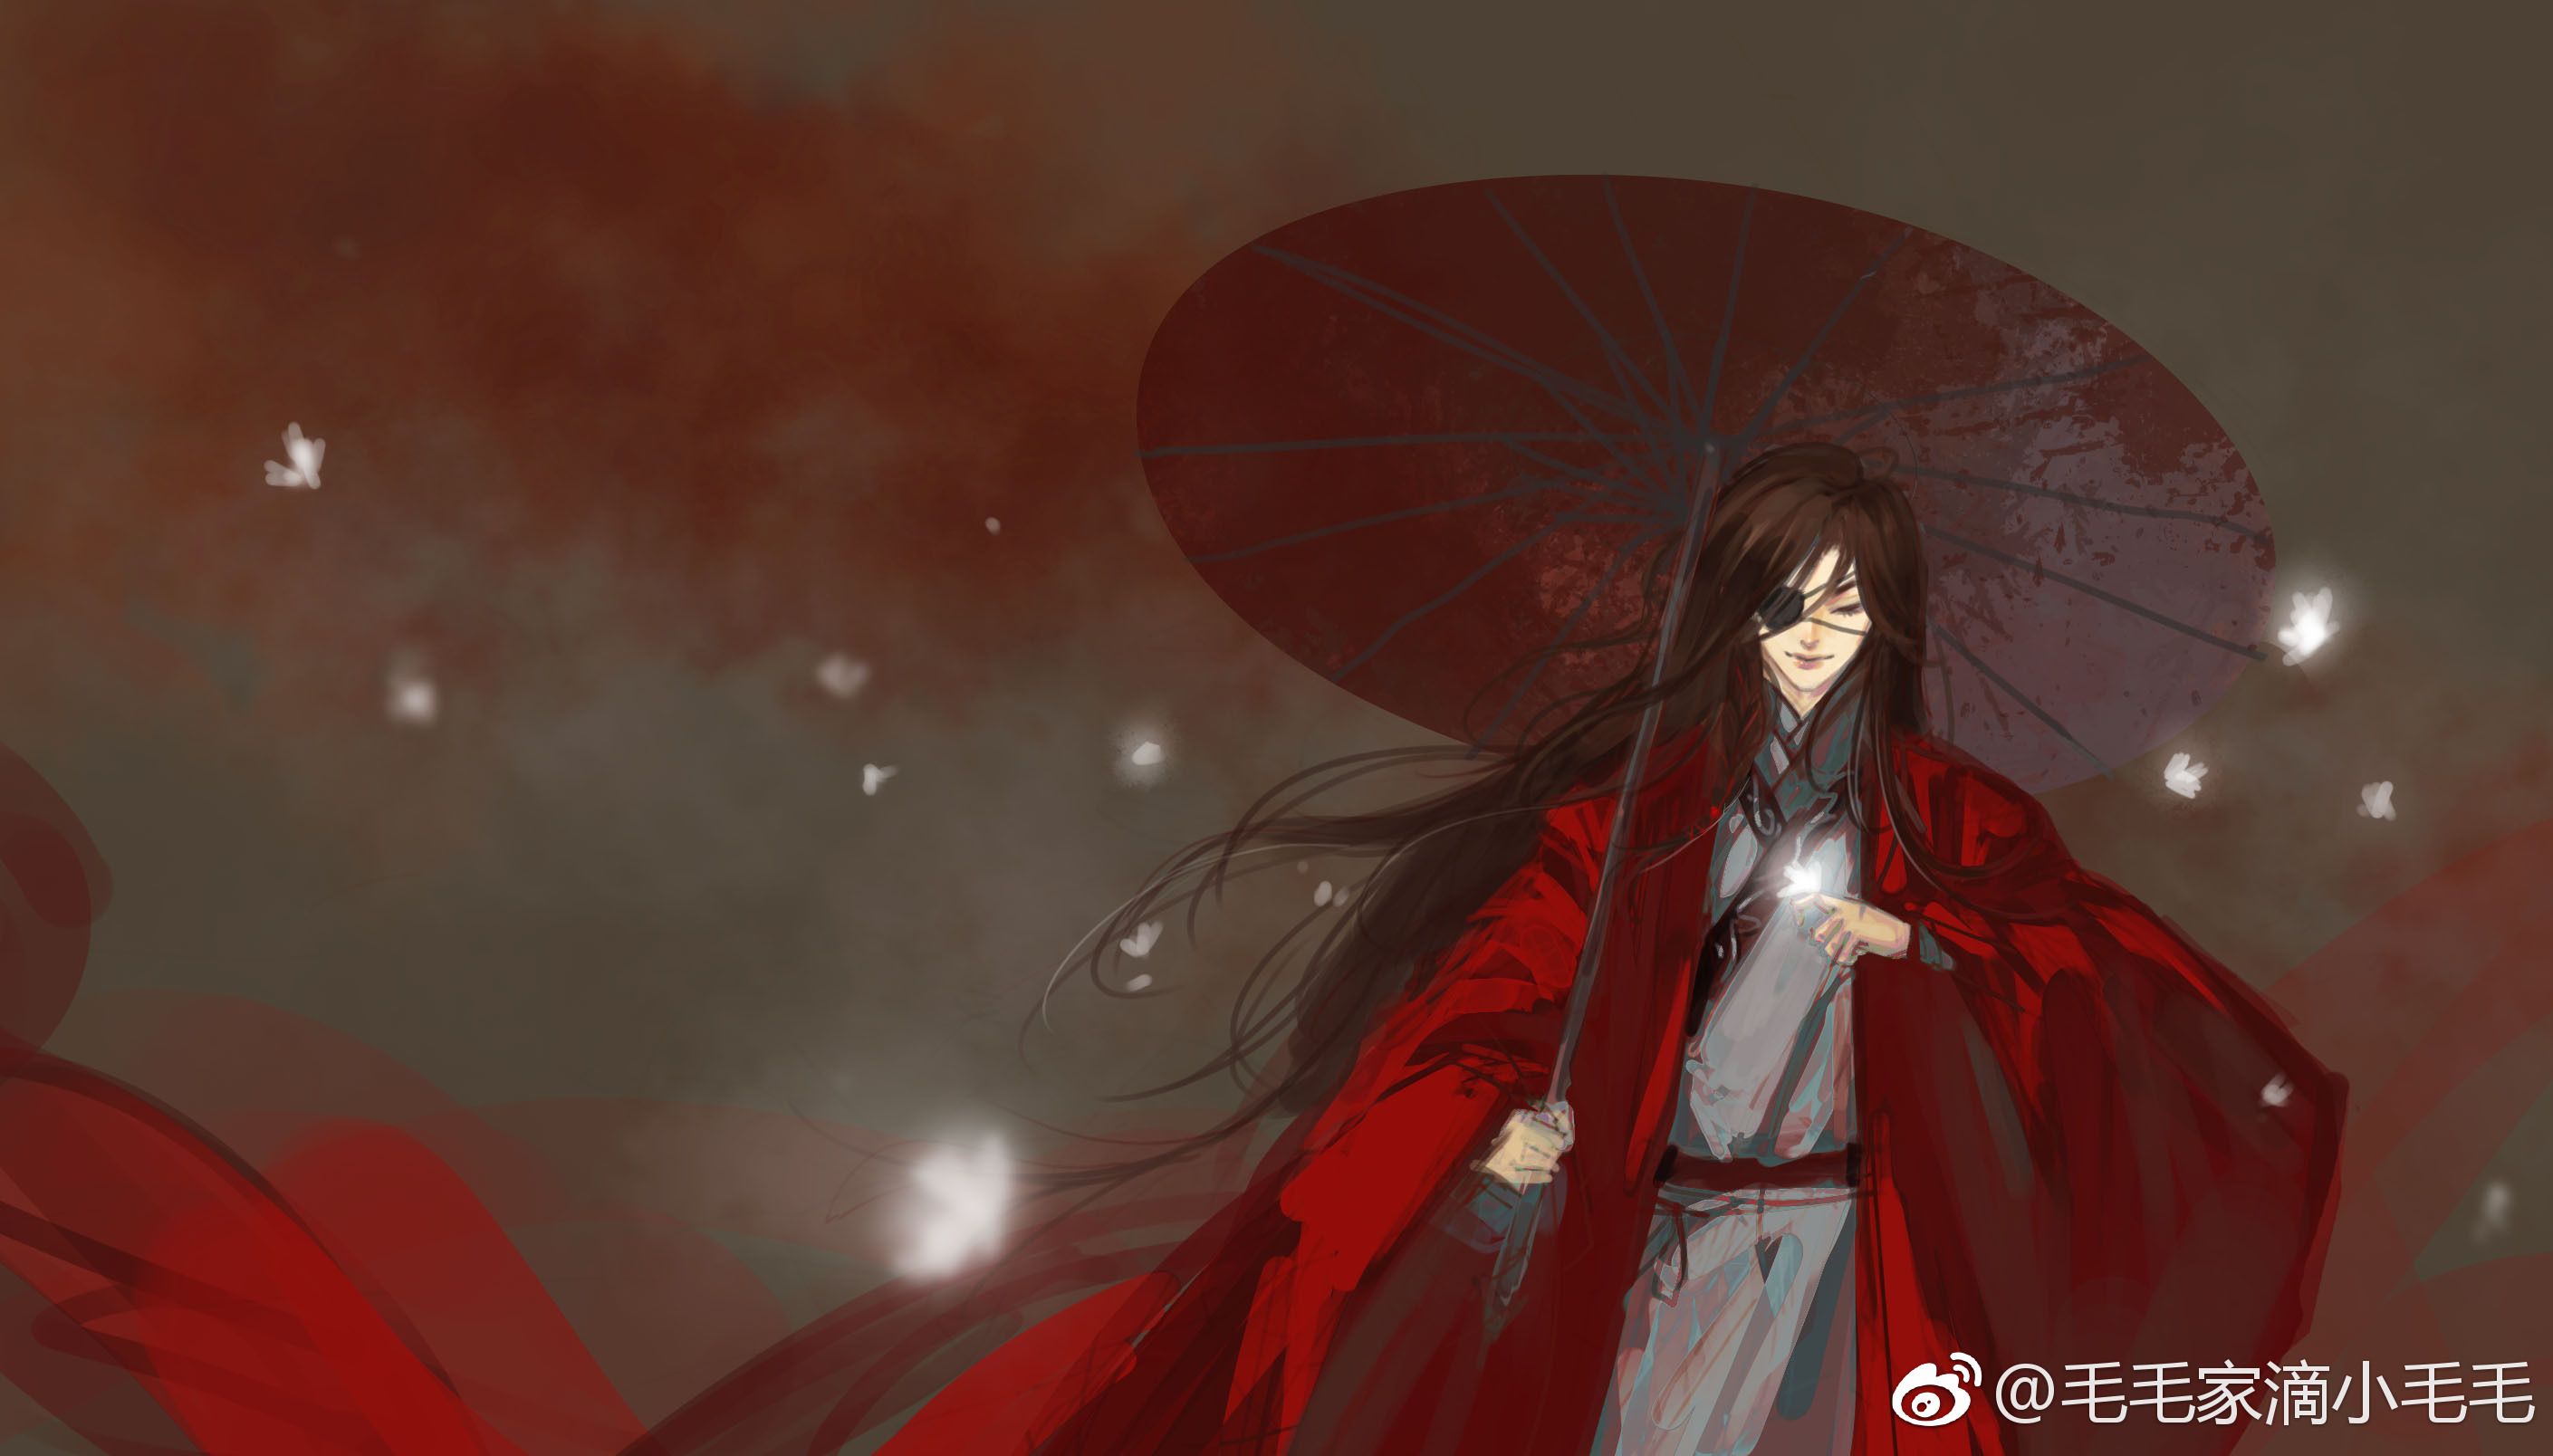 Baixar papel de parede para celular de Anime, Tian Guan Ci Fu, San Lang, A Chuva Carmesim Procurava A Flor, Hua Cheng gratuito.